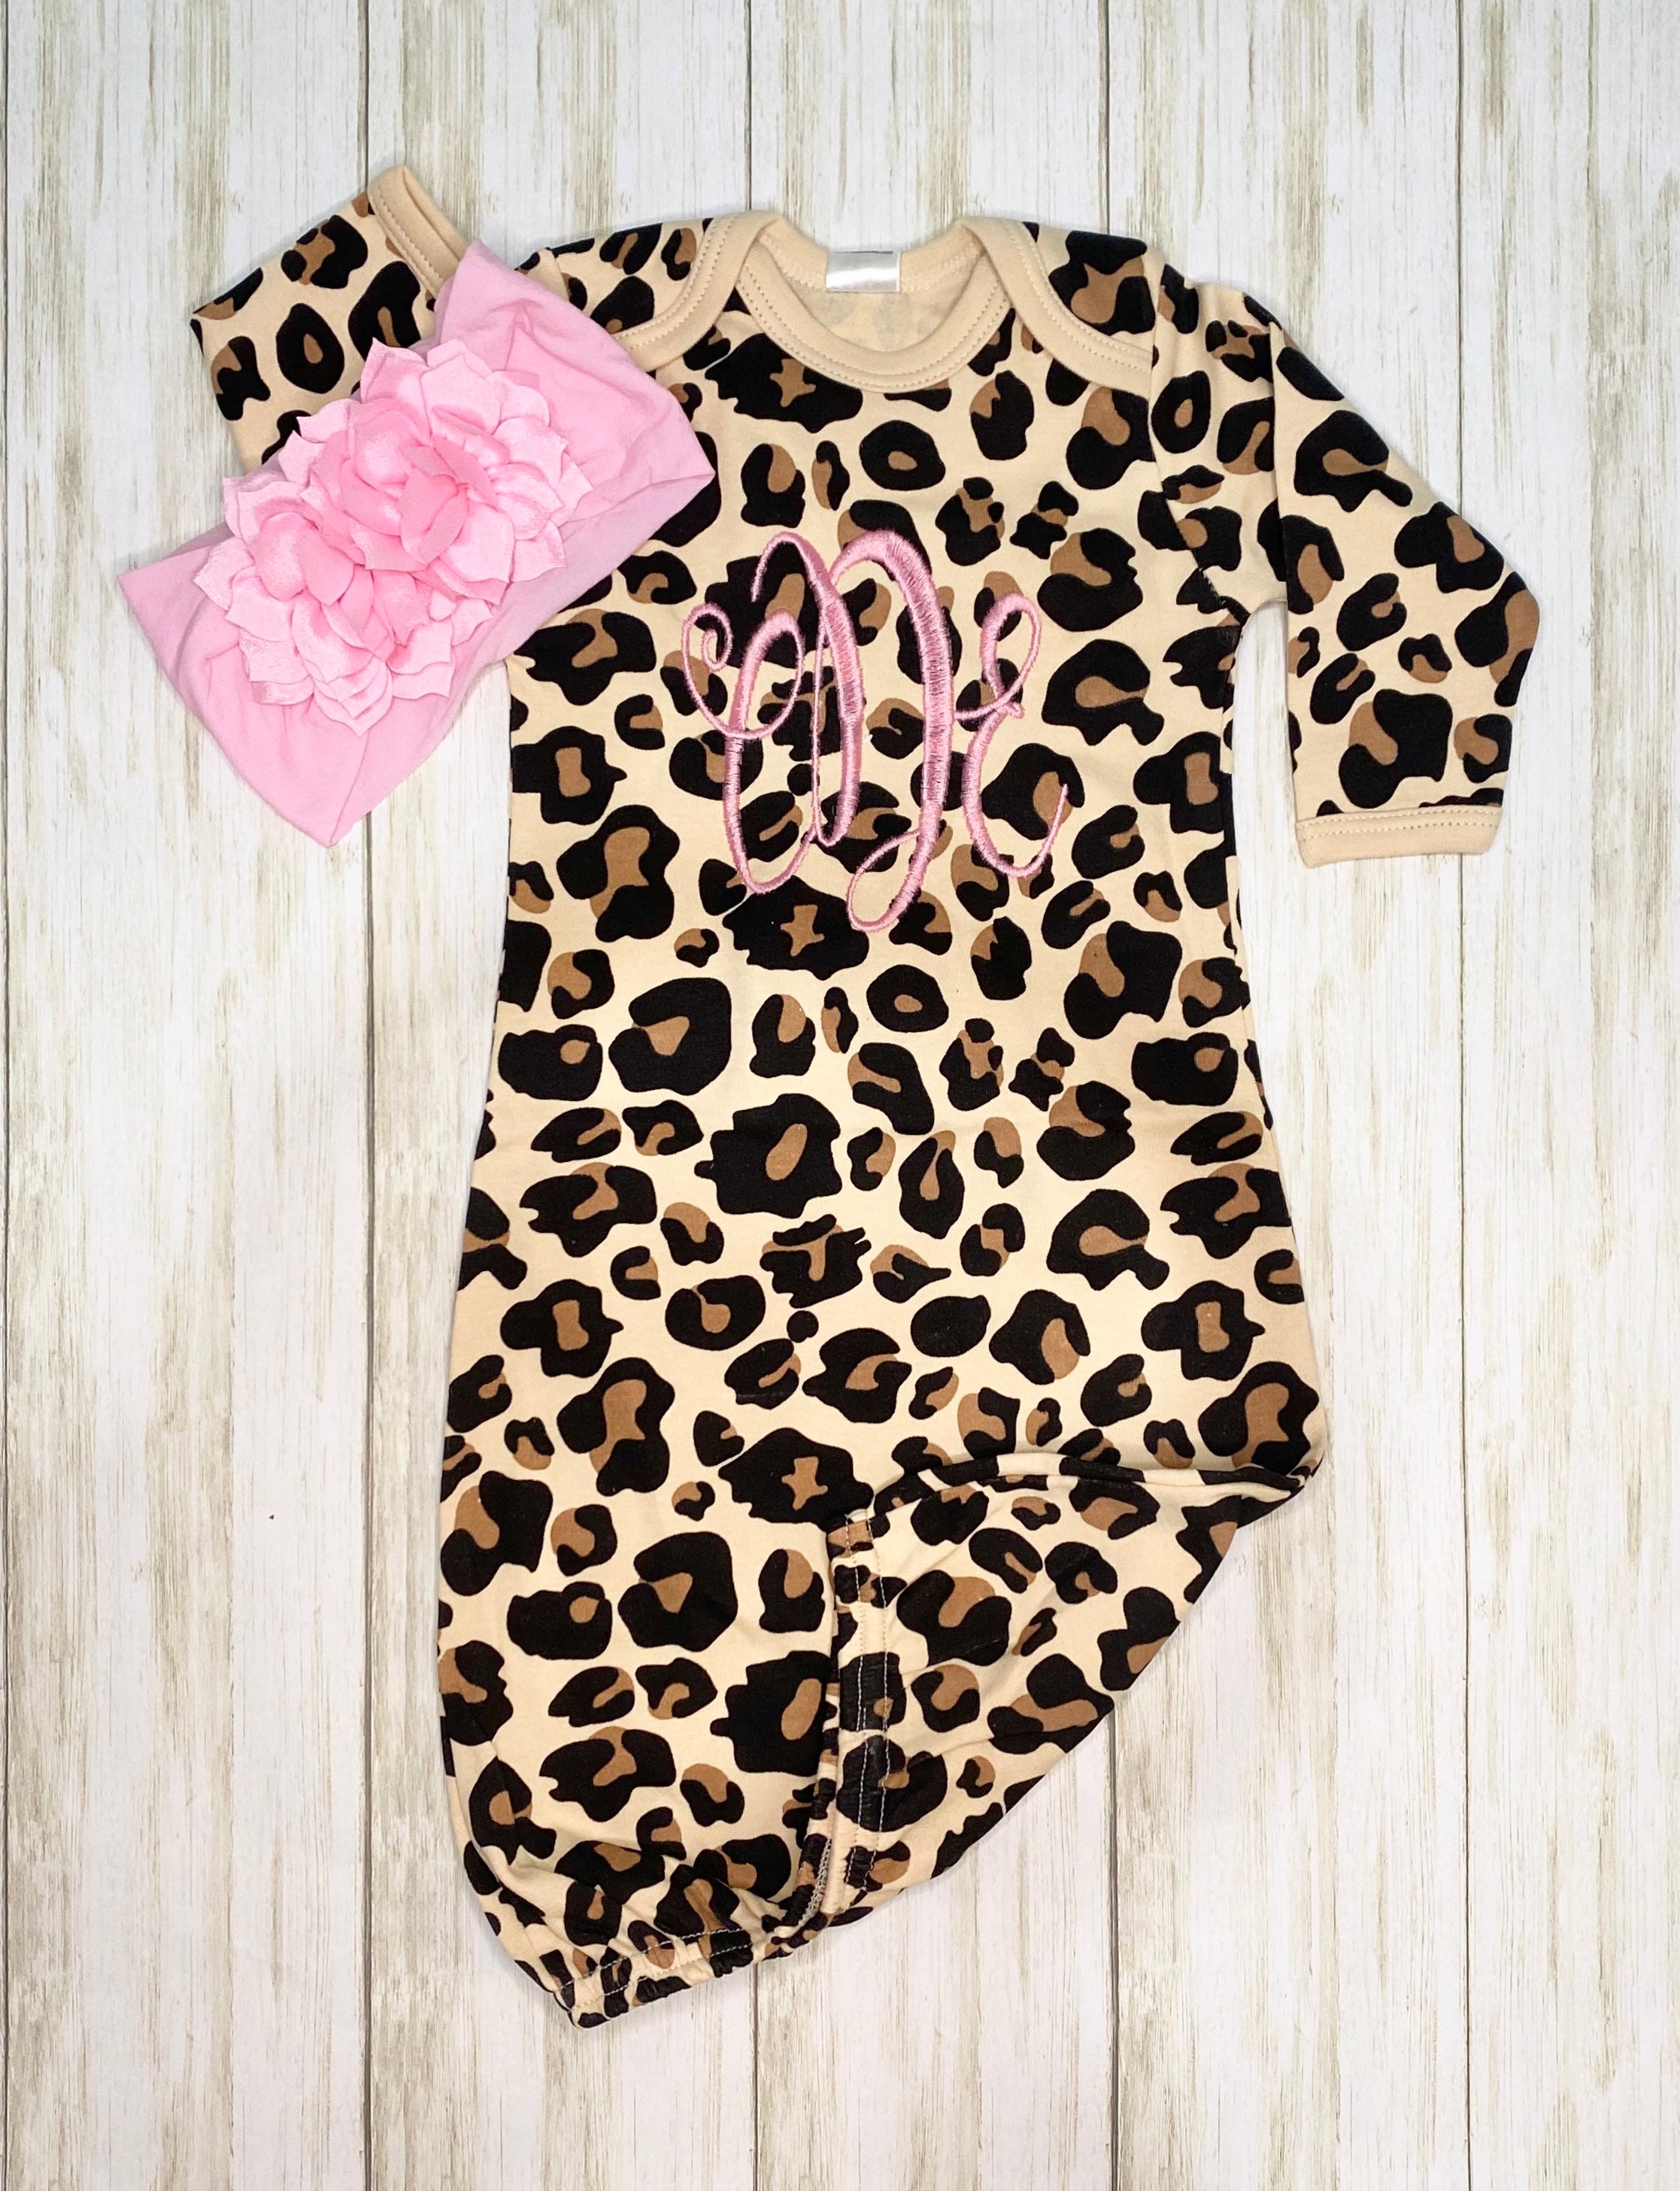 Personalized baby blanket monogrammed baby blanket leopard | Etsy